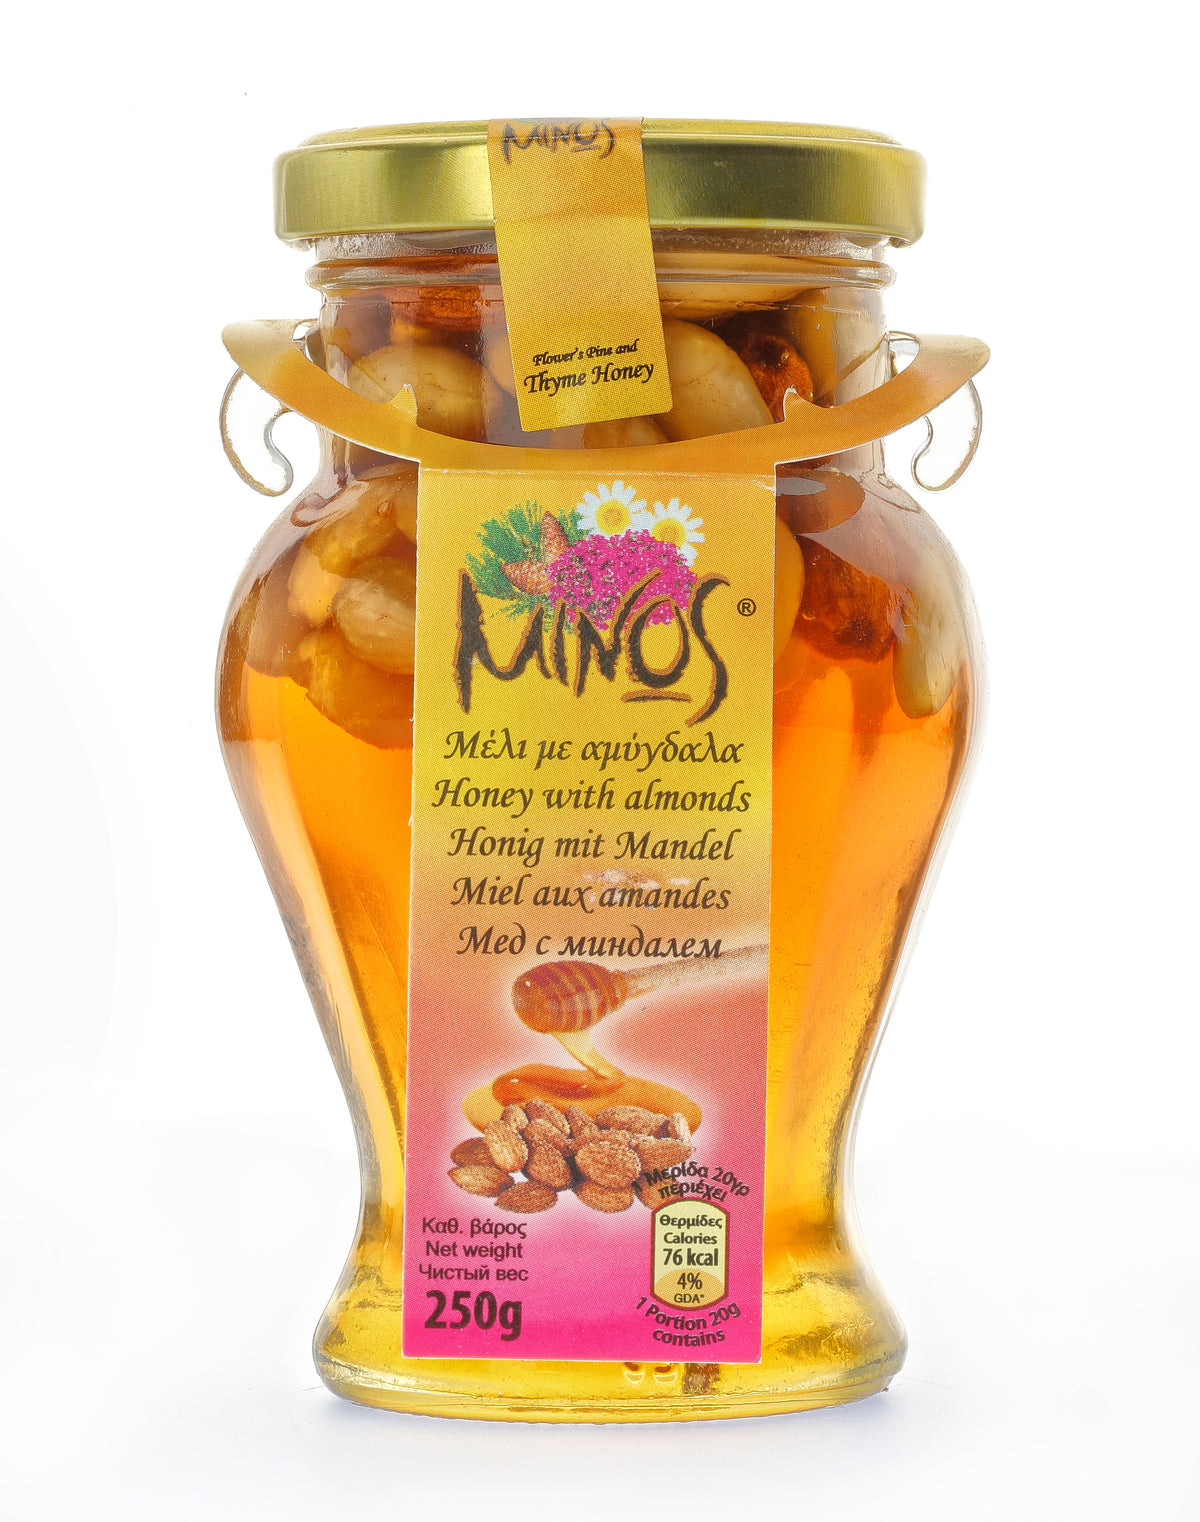 Minos Amphora Glass Jar Honey Flowers Pine Thyme With Almonds 250G